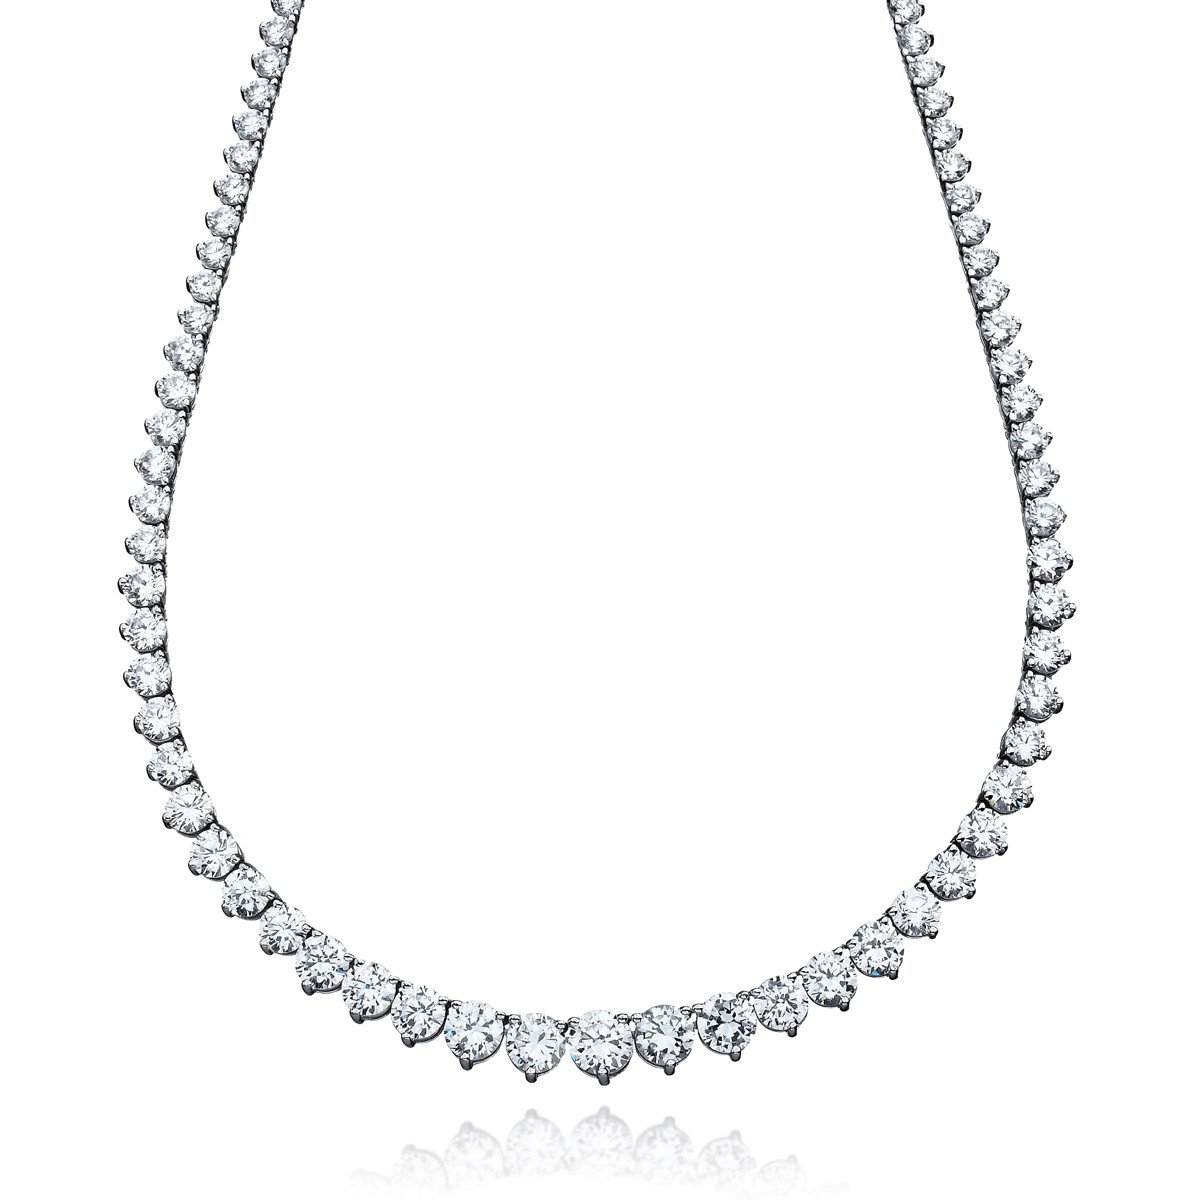 Half and Half Diamond Necklace - Moondance Jewelry Gallery